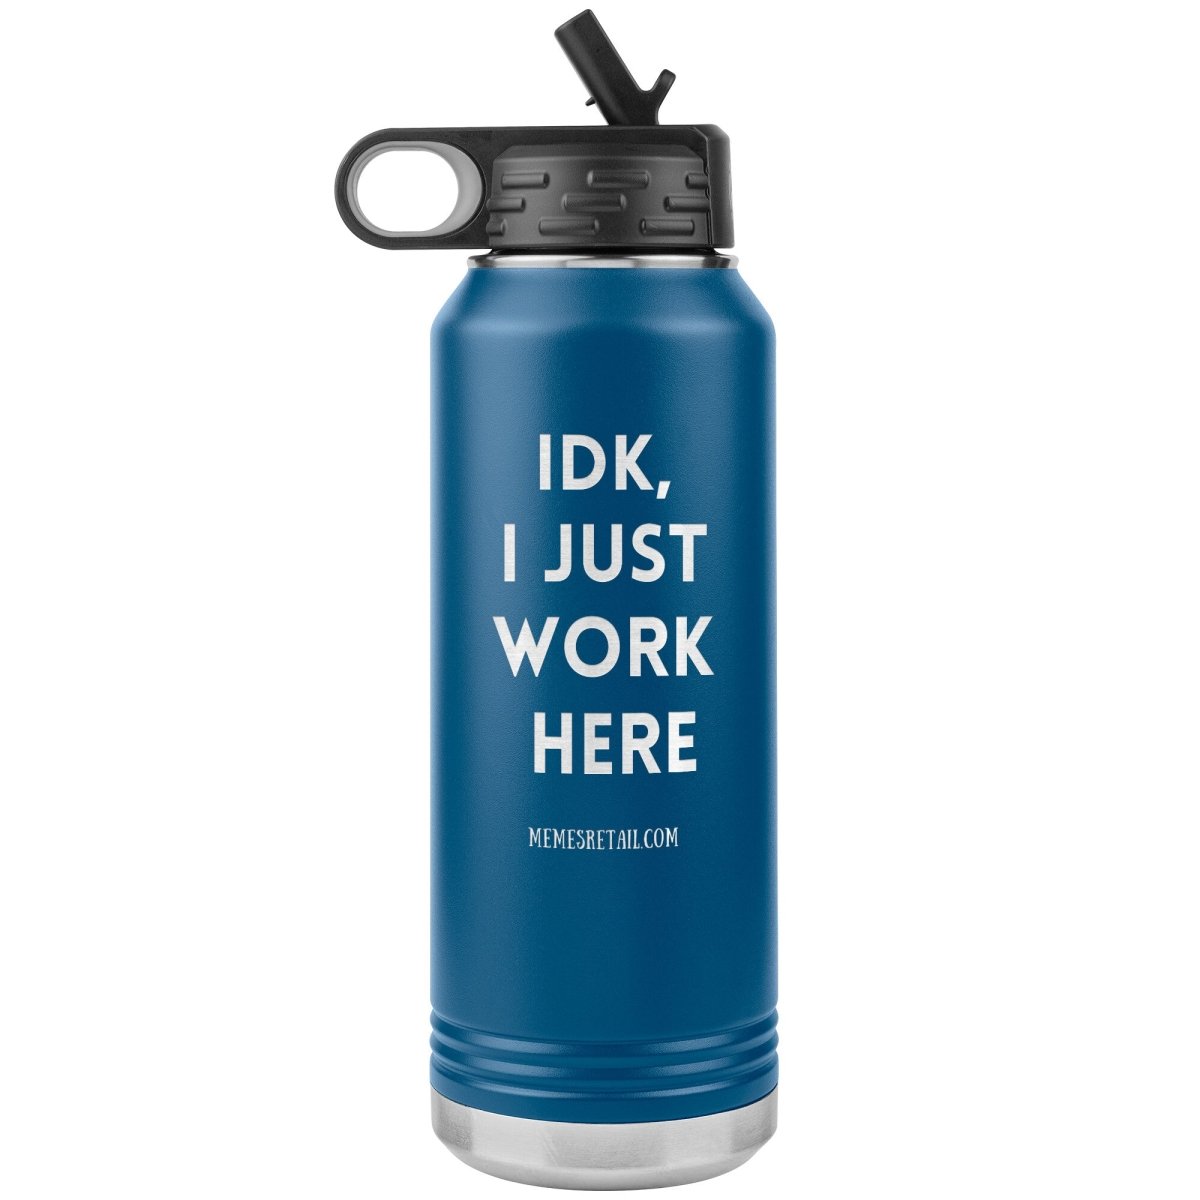 IDK, I Just Work Here 32 oz Stainless Steel Water Bottle Tumbler, Blue - MemesRetail.com